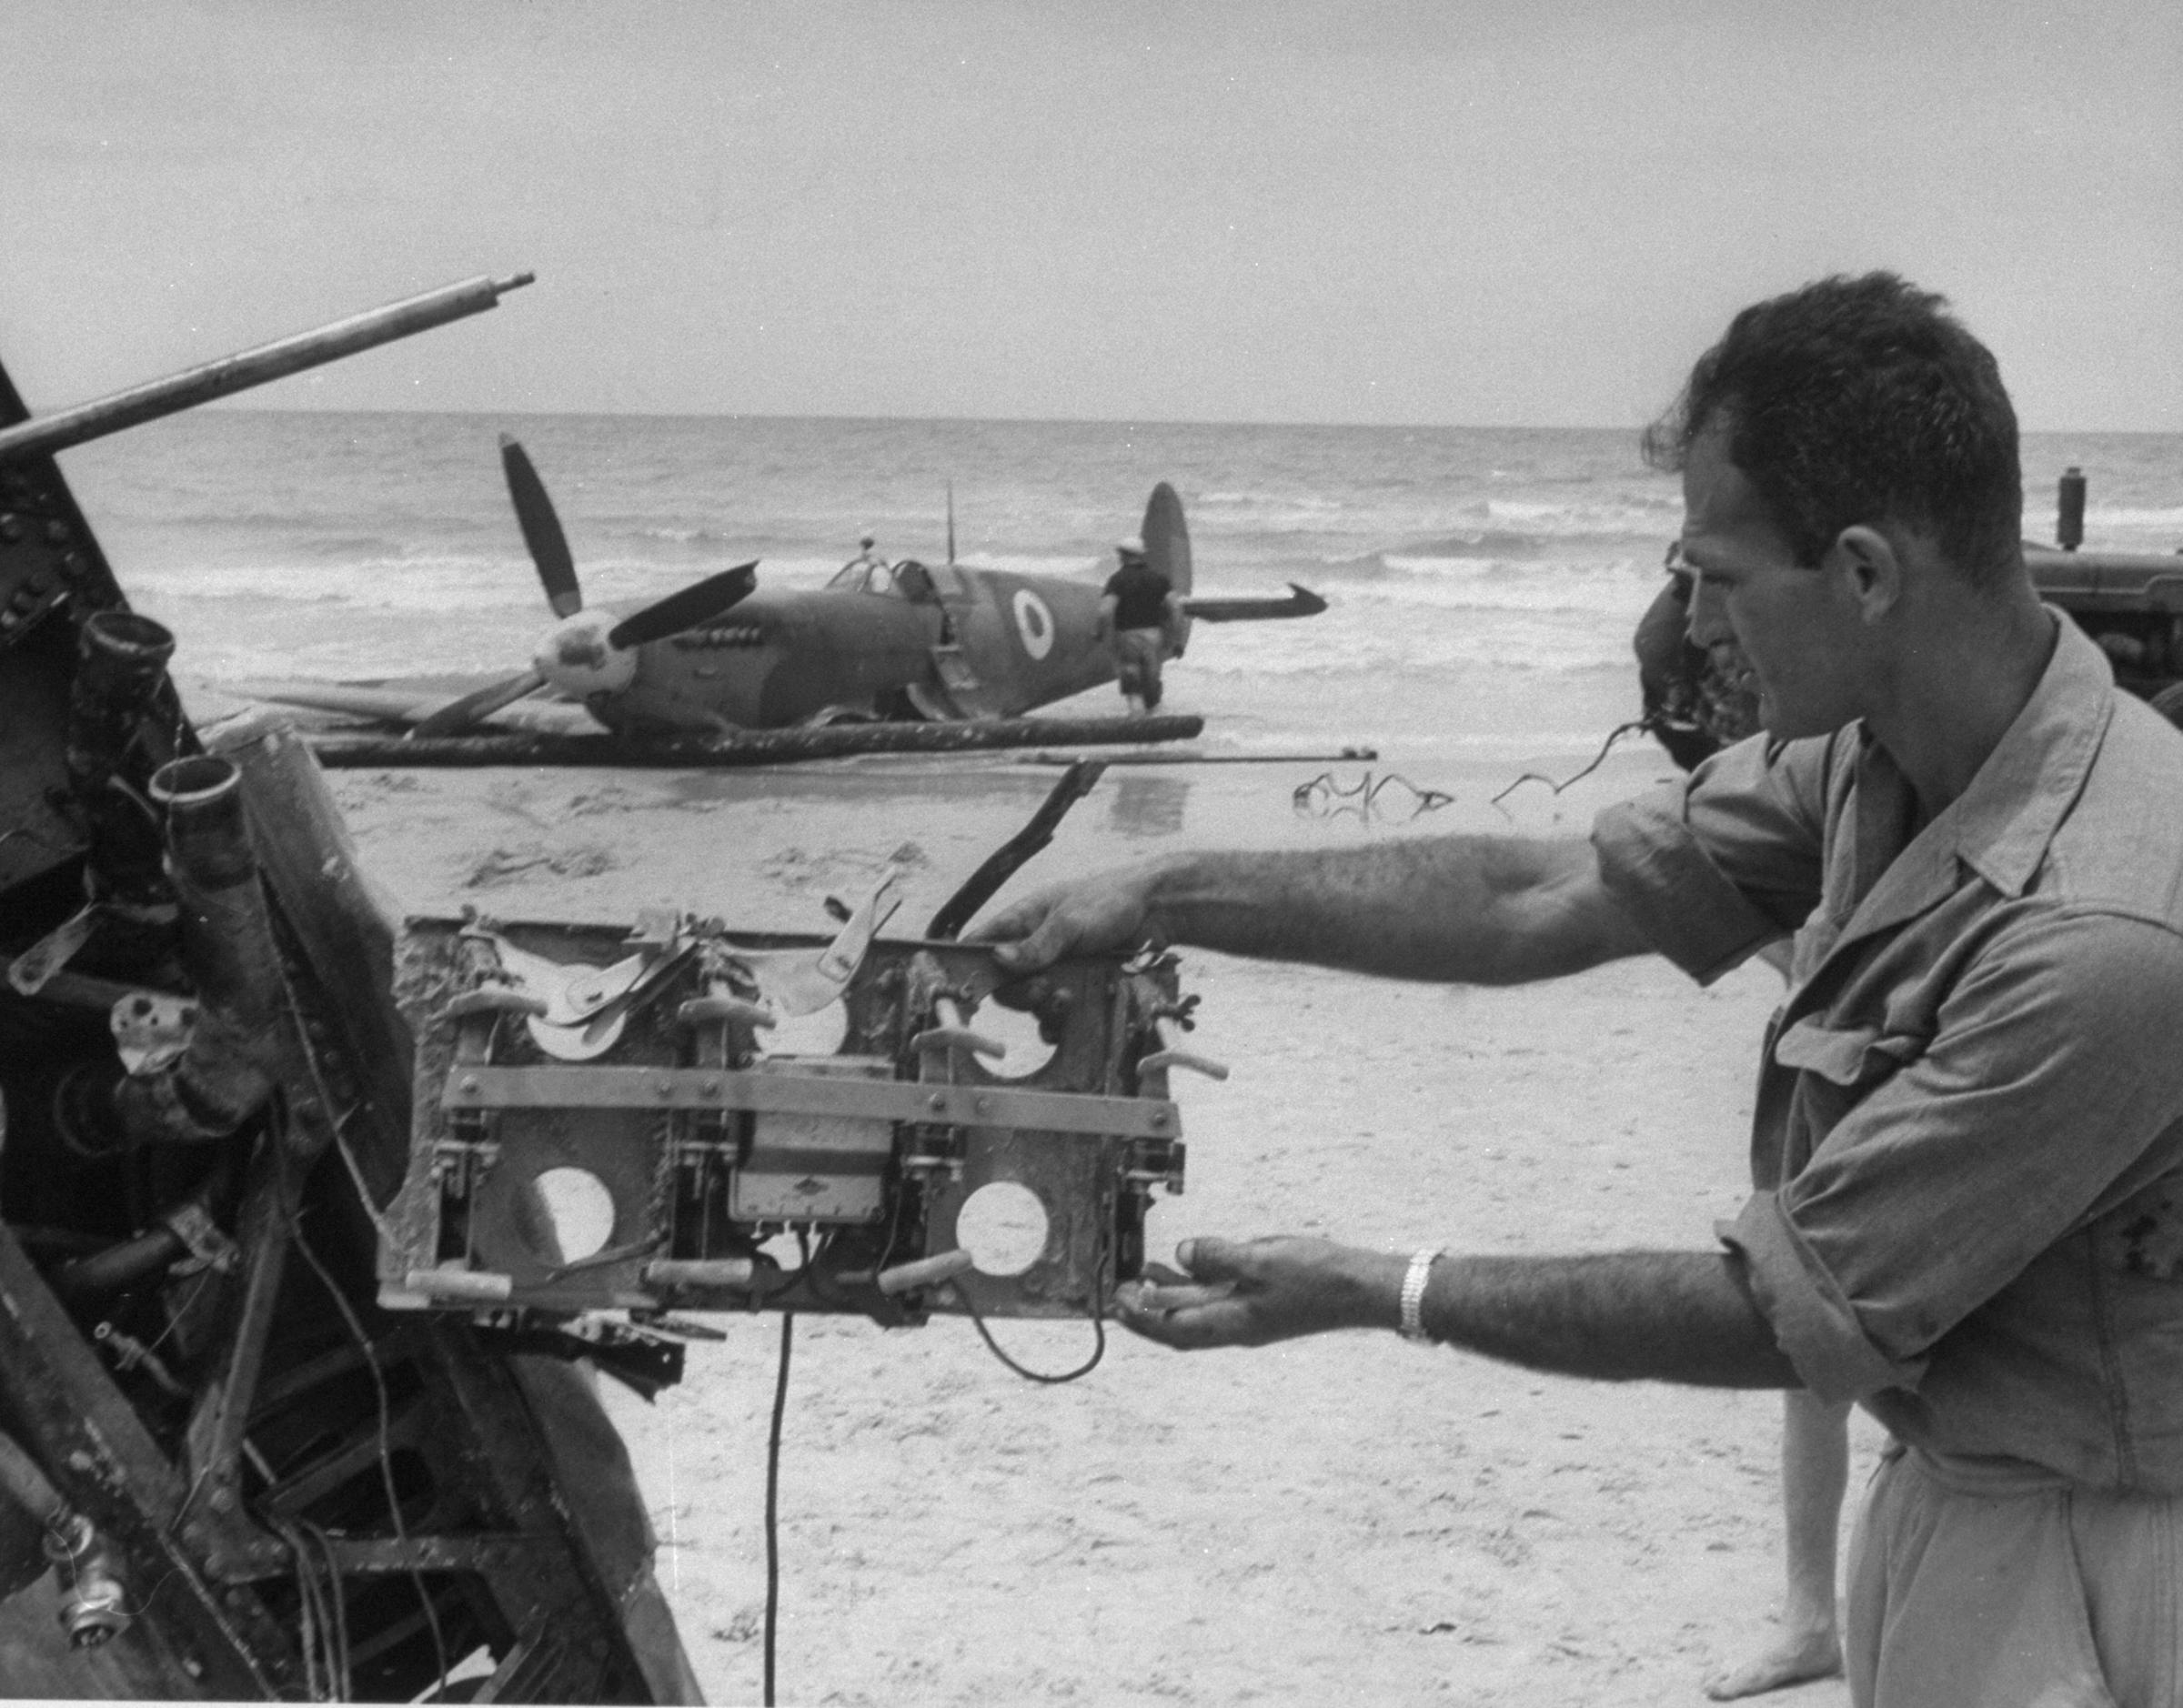 Haganah [Jewish paramilitary] soldier examines souvenir from Egyptian Spitfire shot down by Jews on Tel Aviv beach.